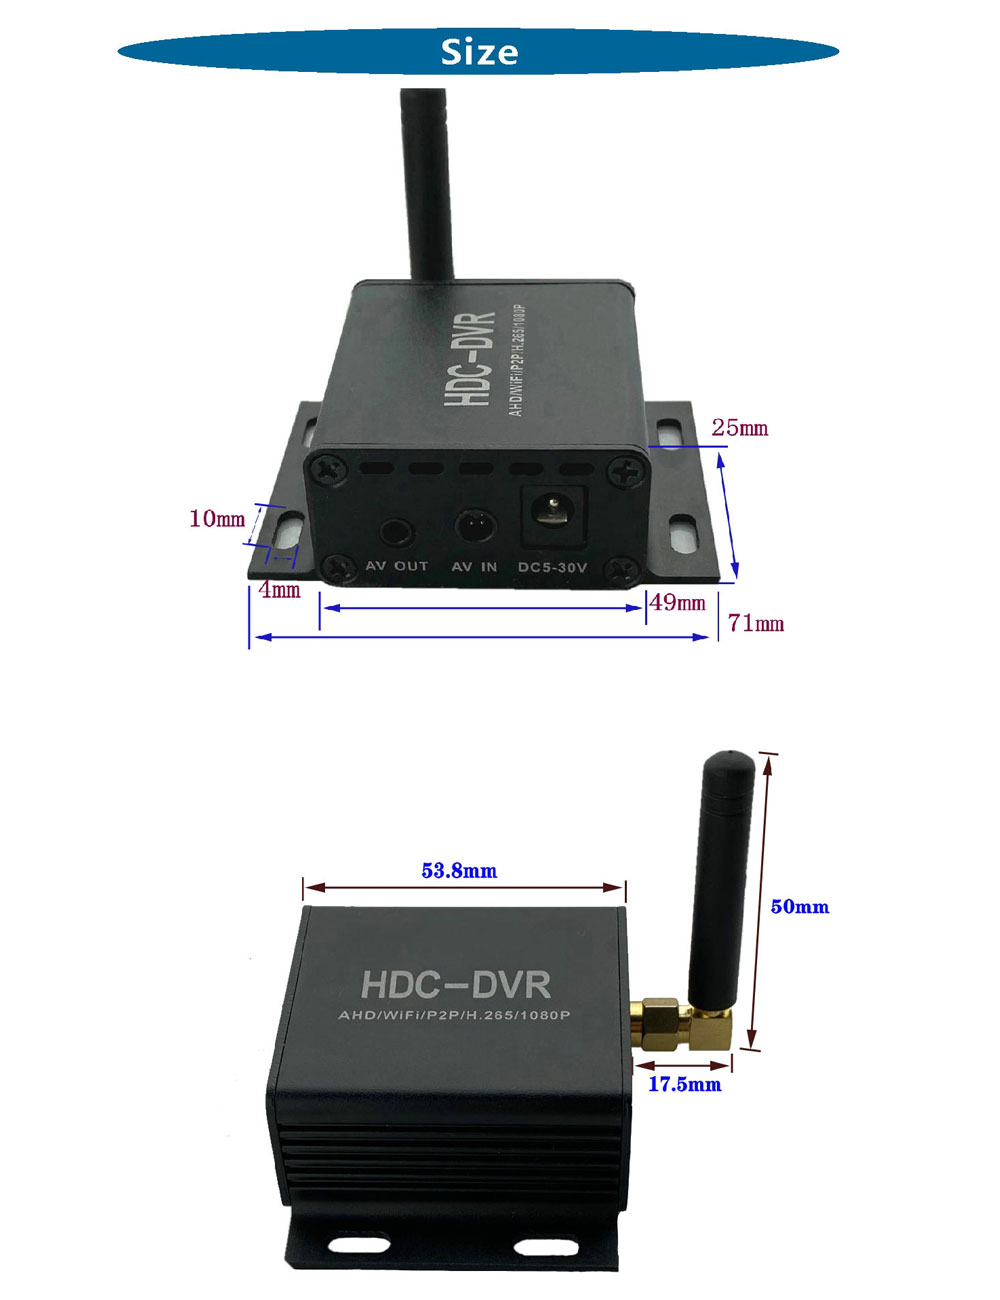 1080p hd mini wifi cam dvr system cctv bil ahd dvr  p2p videoovervågning dvr optager til ahd cvi tvi kamera support tf kort